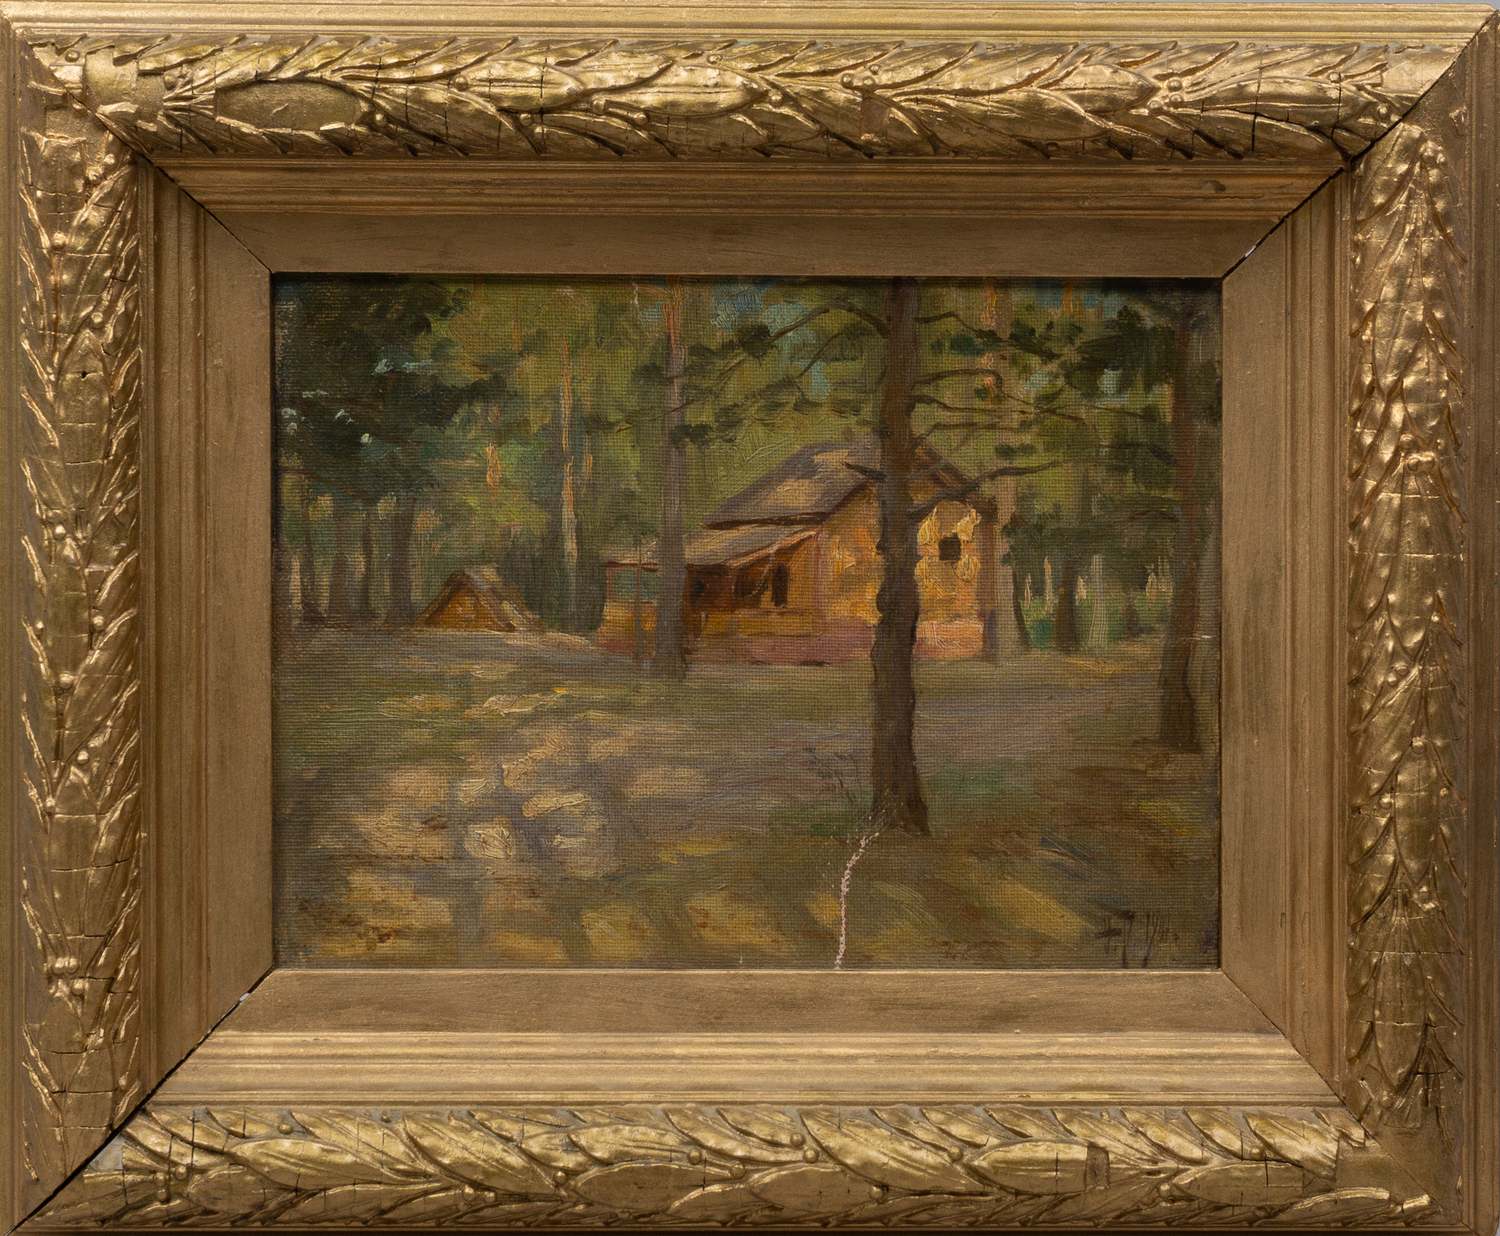 Рерберг Федор Иванович (?). Домик в лесу. 1901.